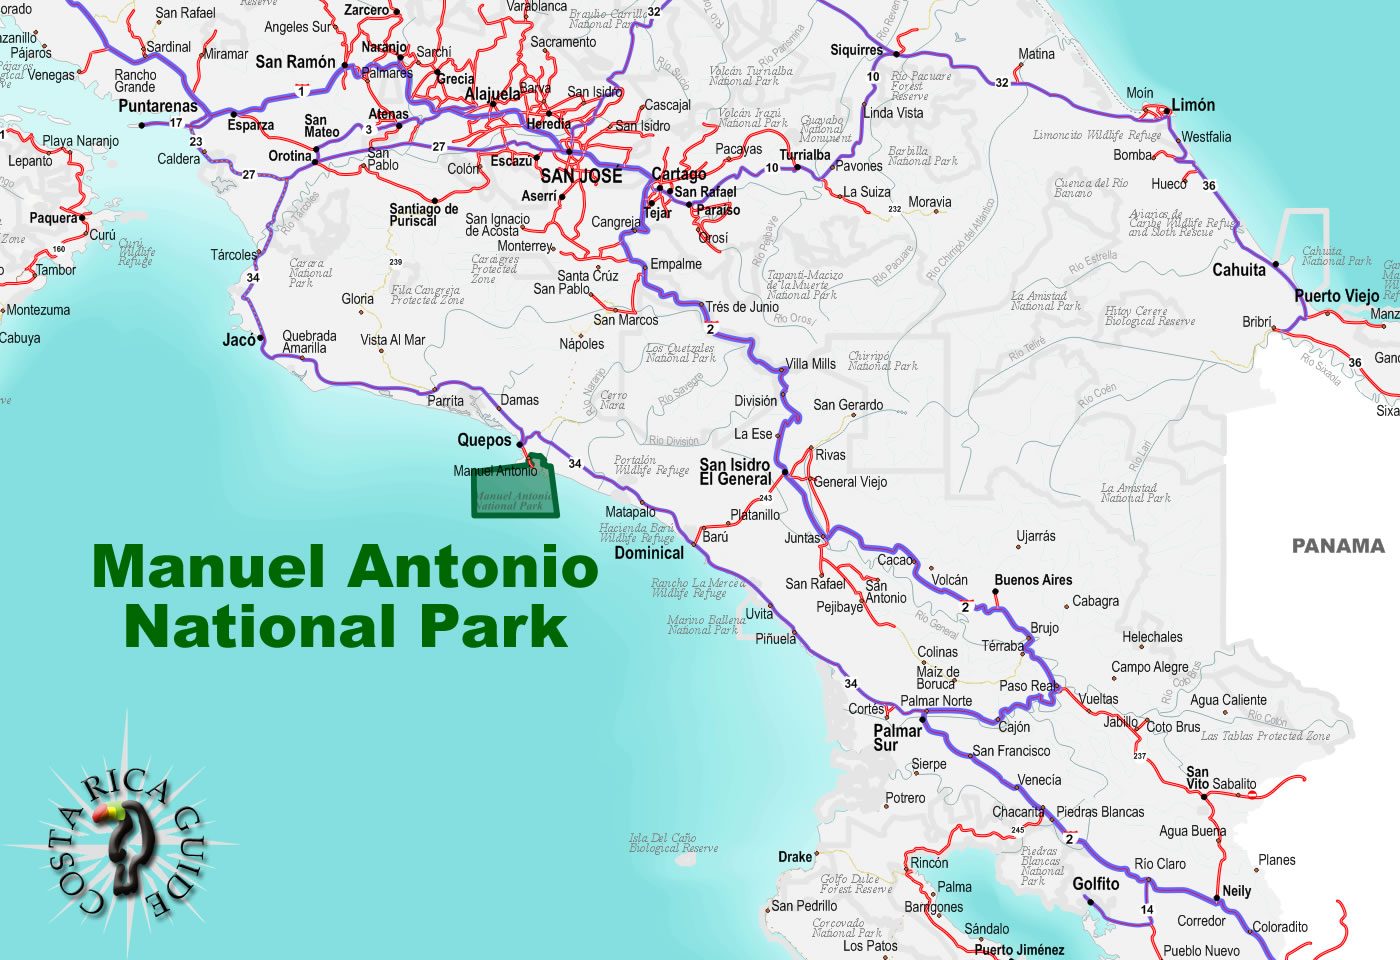 Manuel Antonio National Park Location 